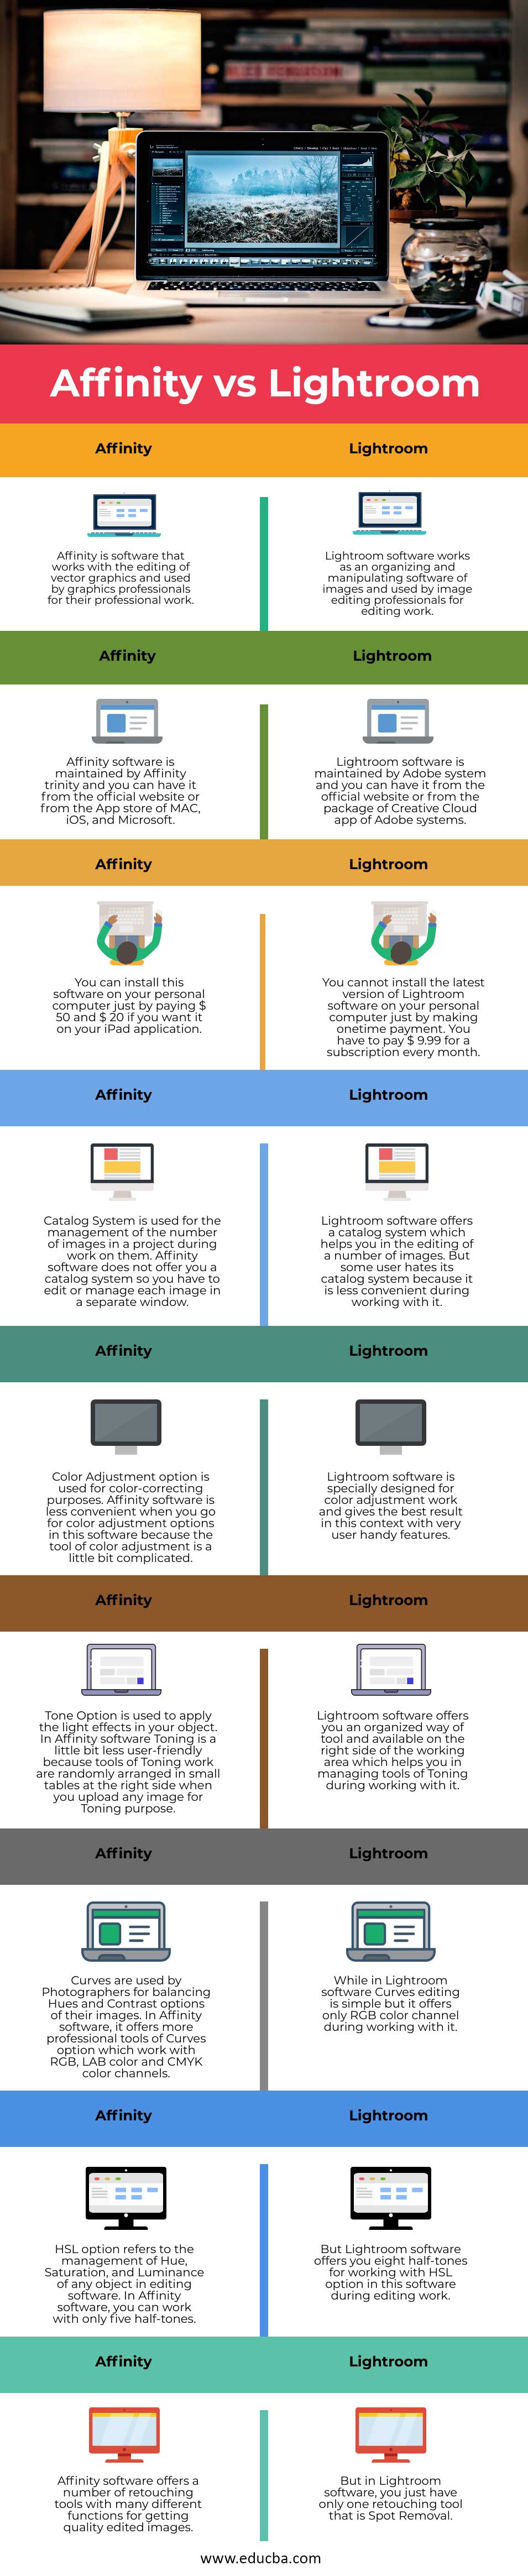 Affinity-vs-Lightroom-info